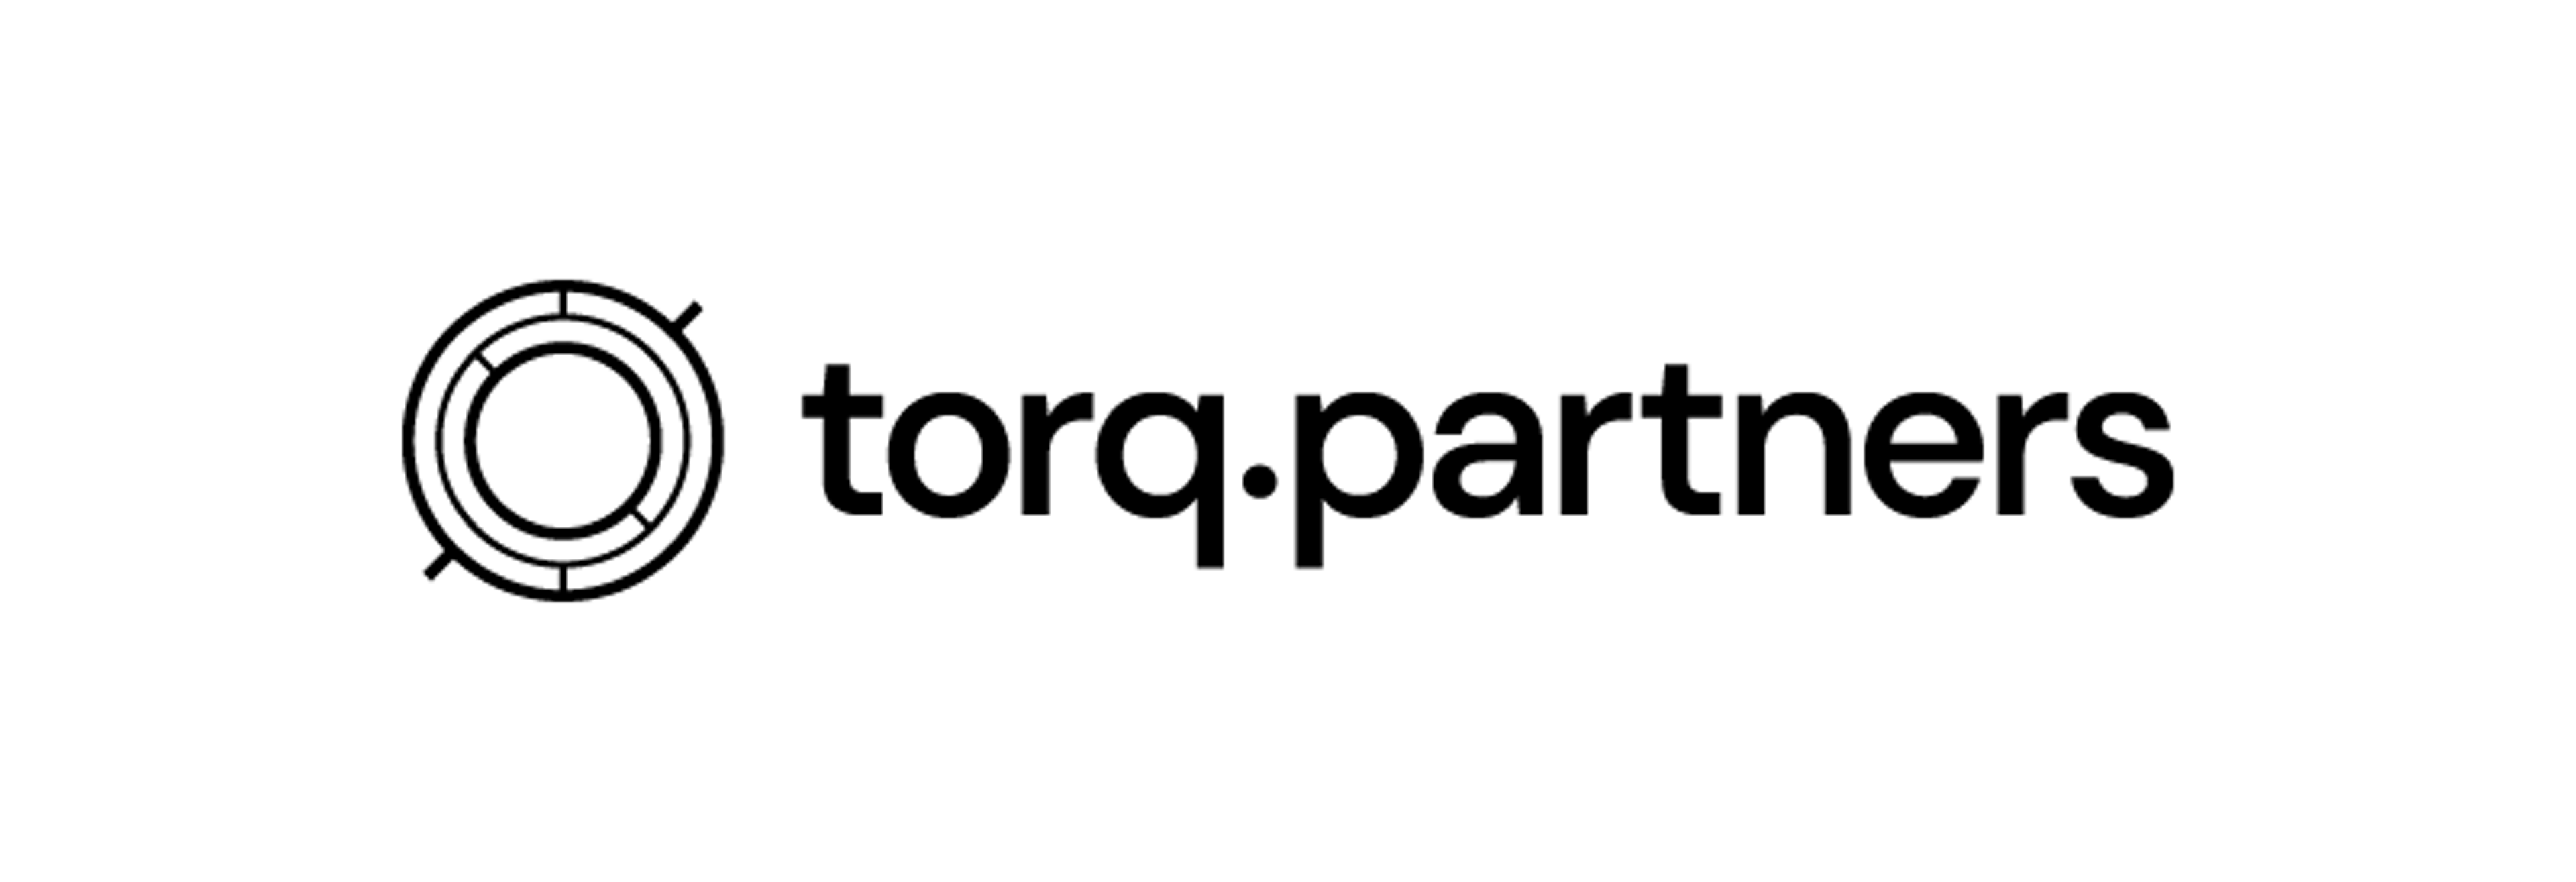 Torq.partners logo